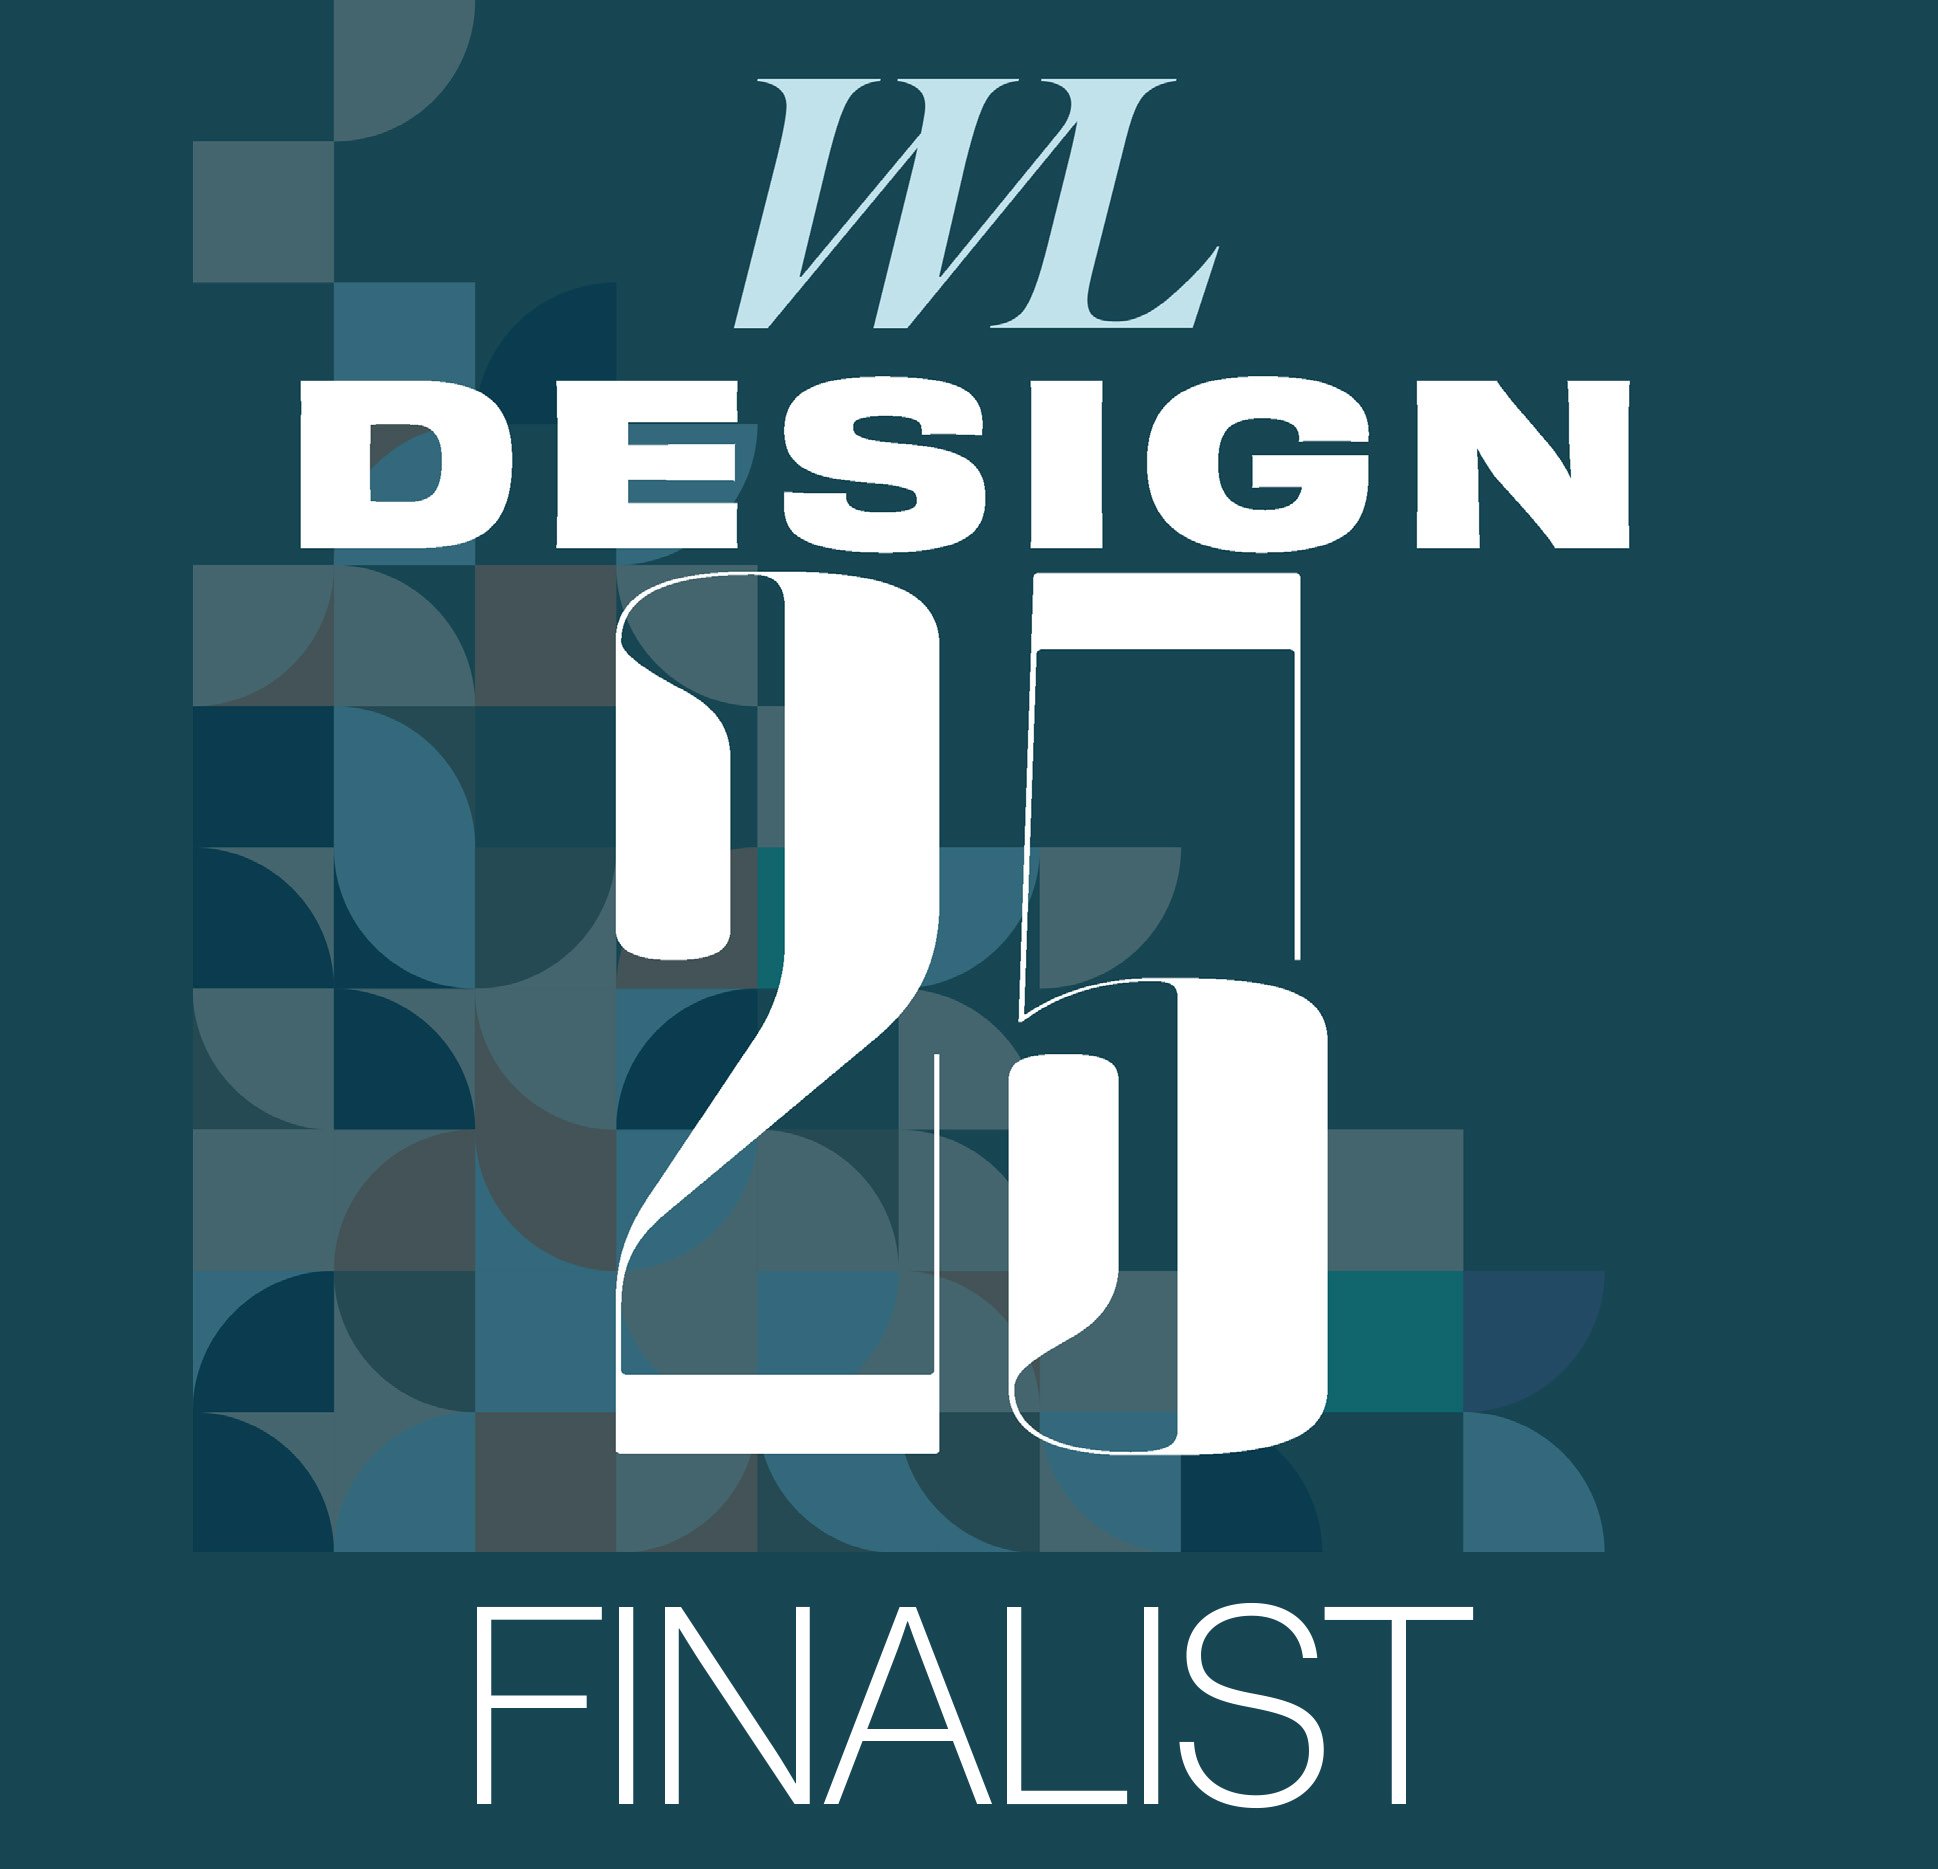 WL Design 25 Finalist Web Badges.jpg